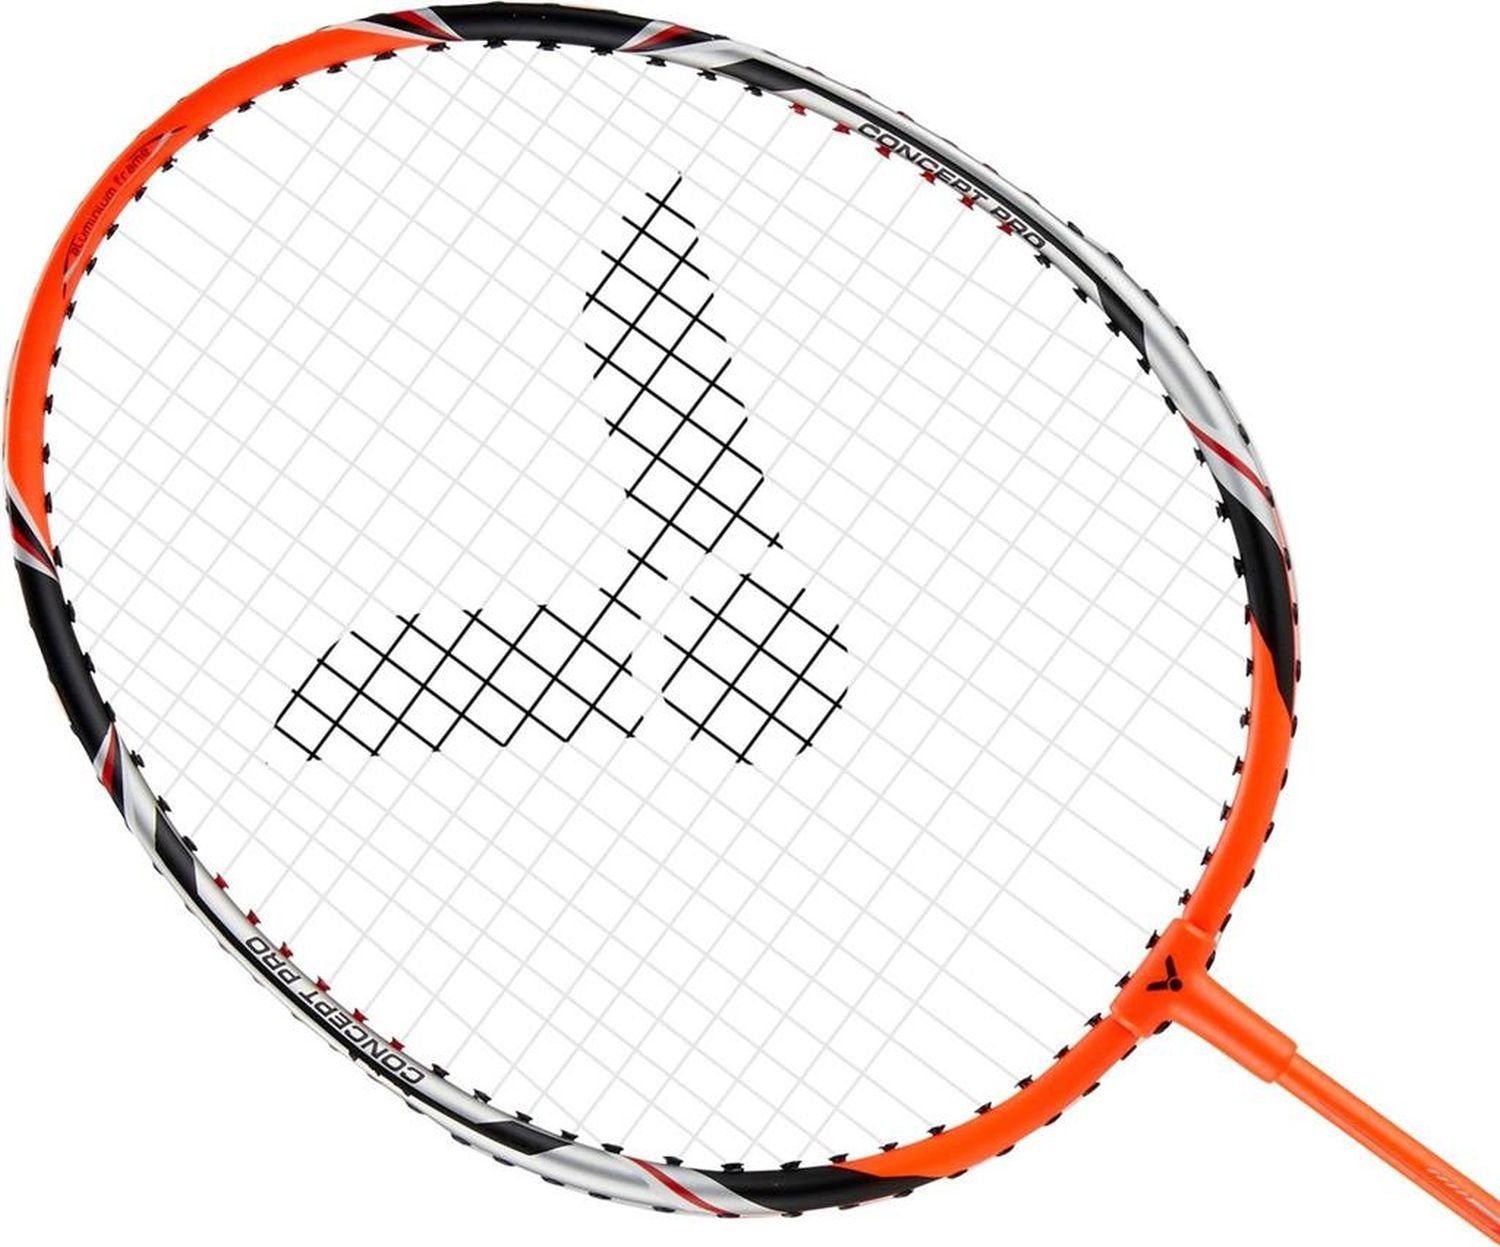 VICTOR Pro Badmintonschläger